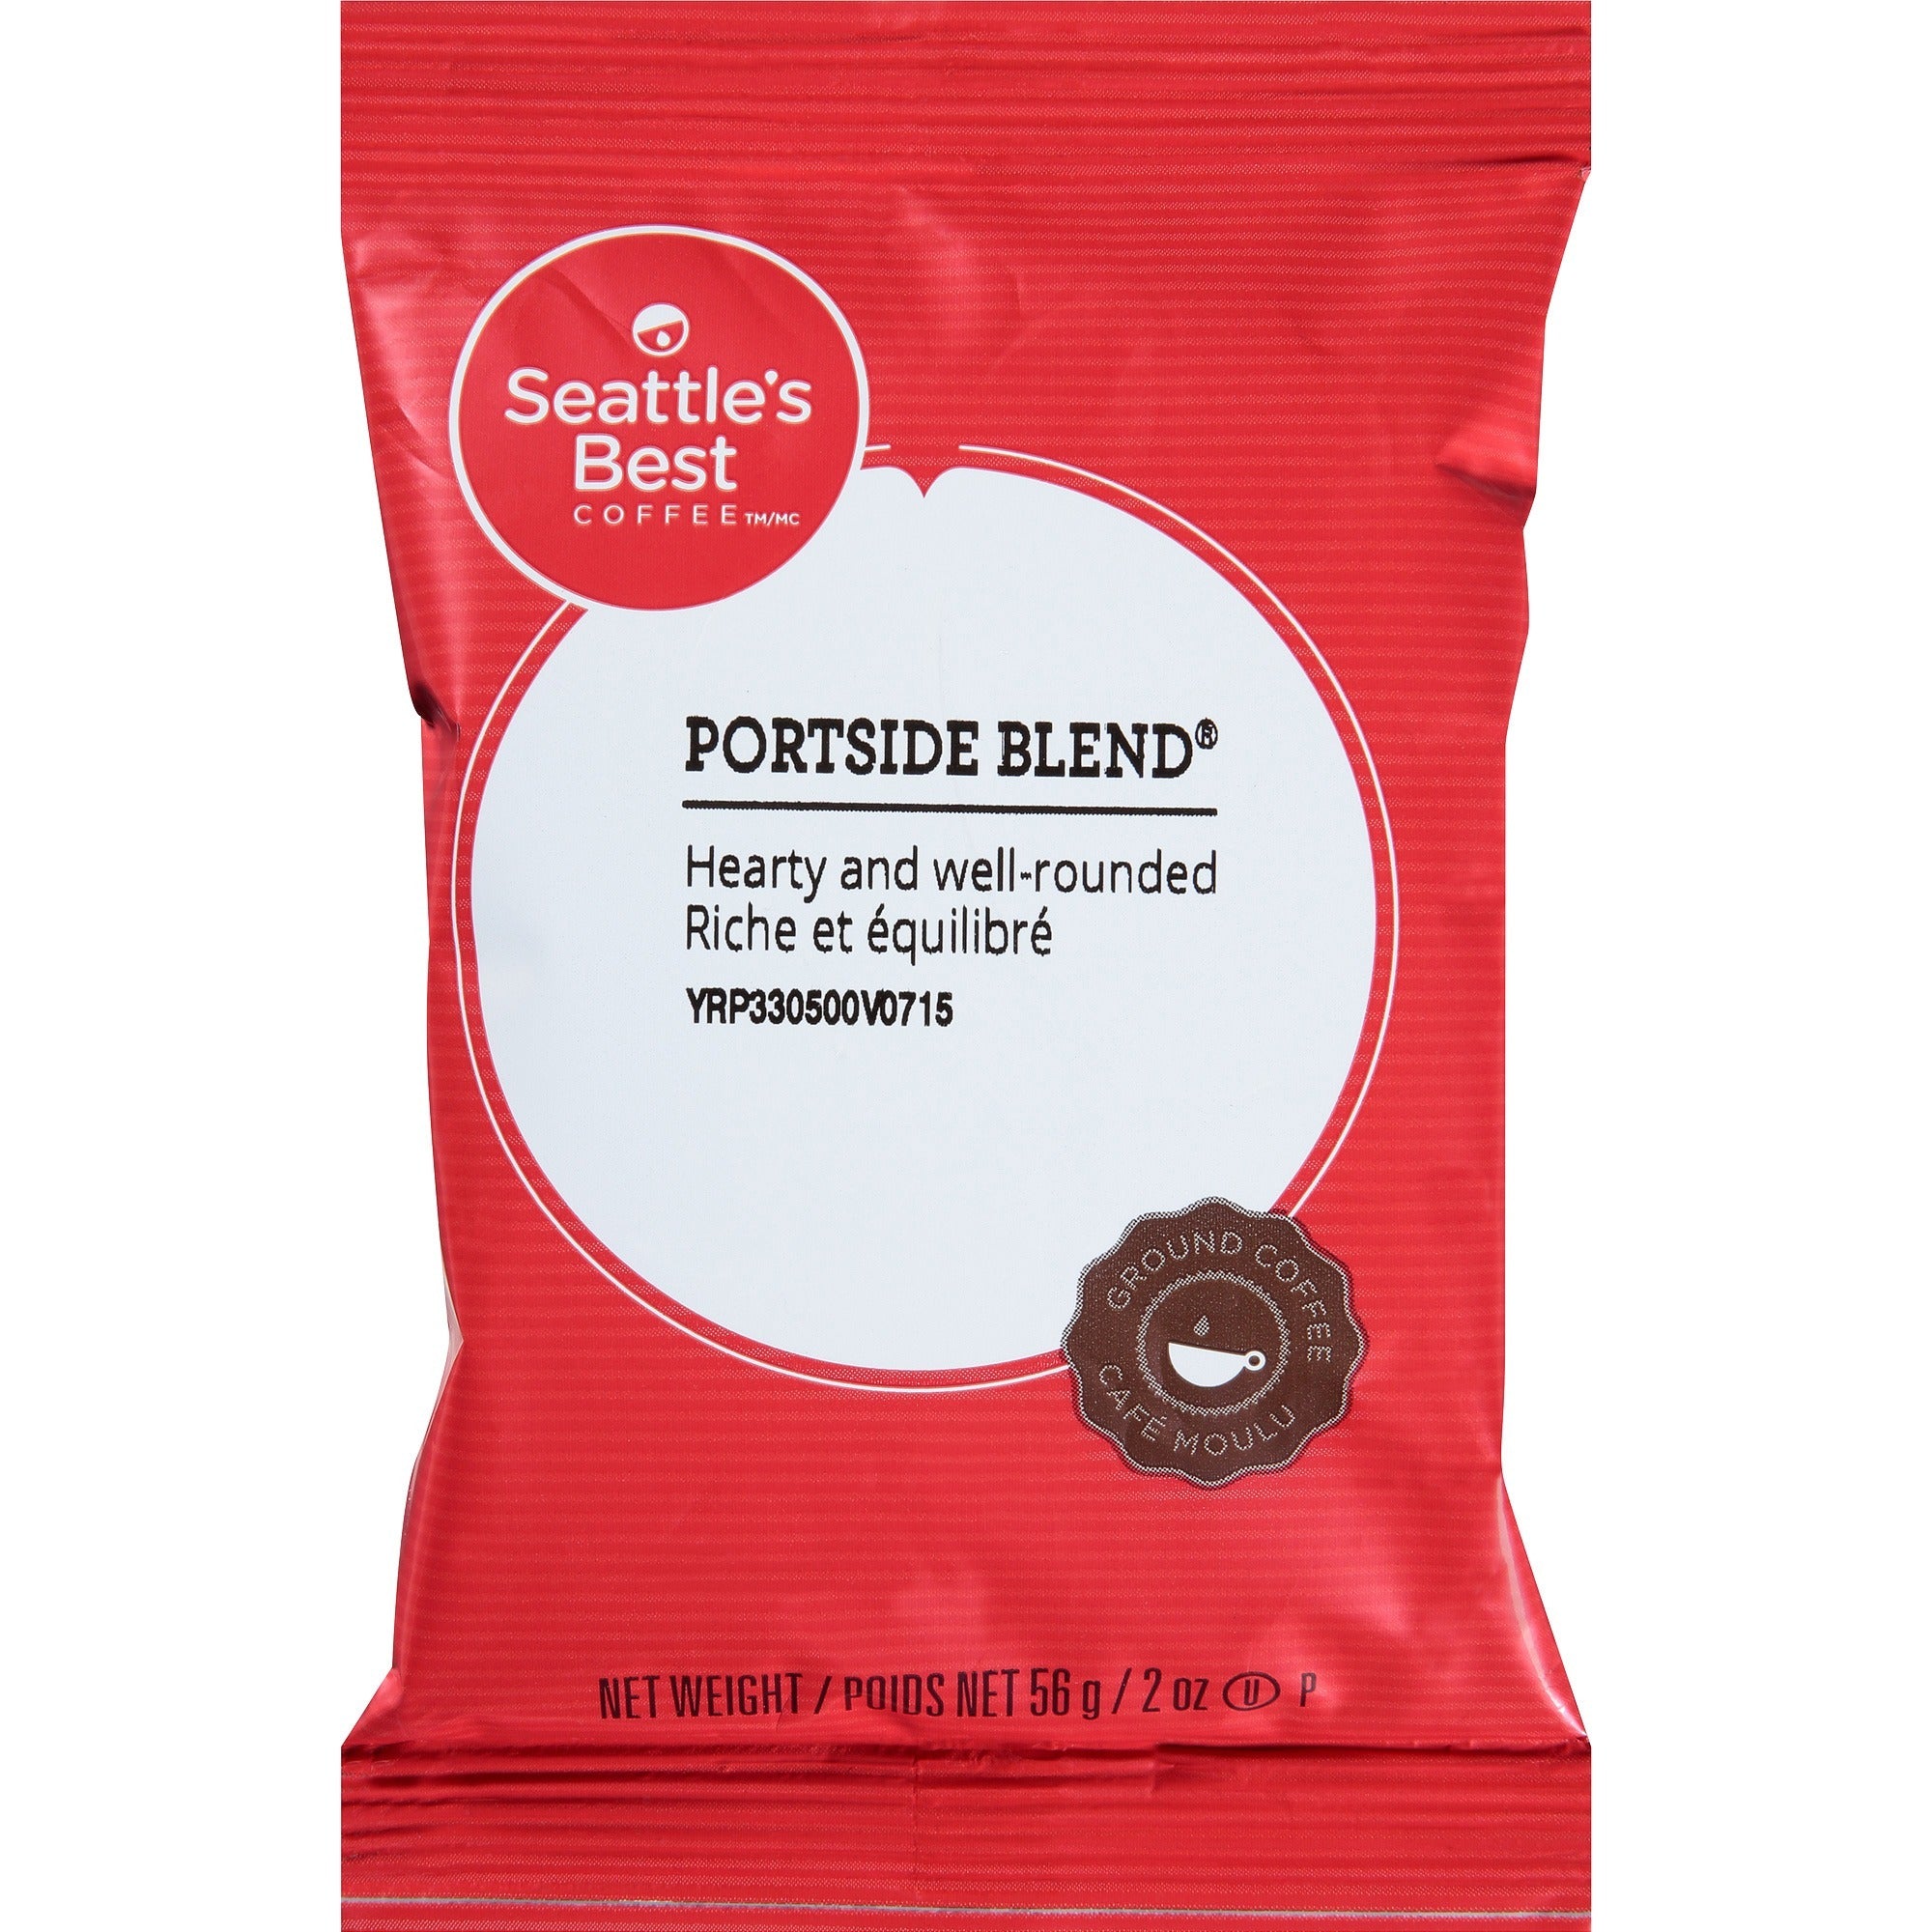 seattles-best-coffee-portside-blend-coffee-pack-medium-2-oz-18-box_sea12420871 - 1